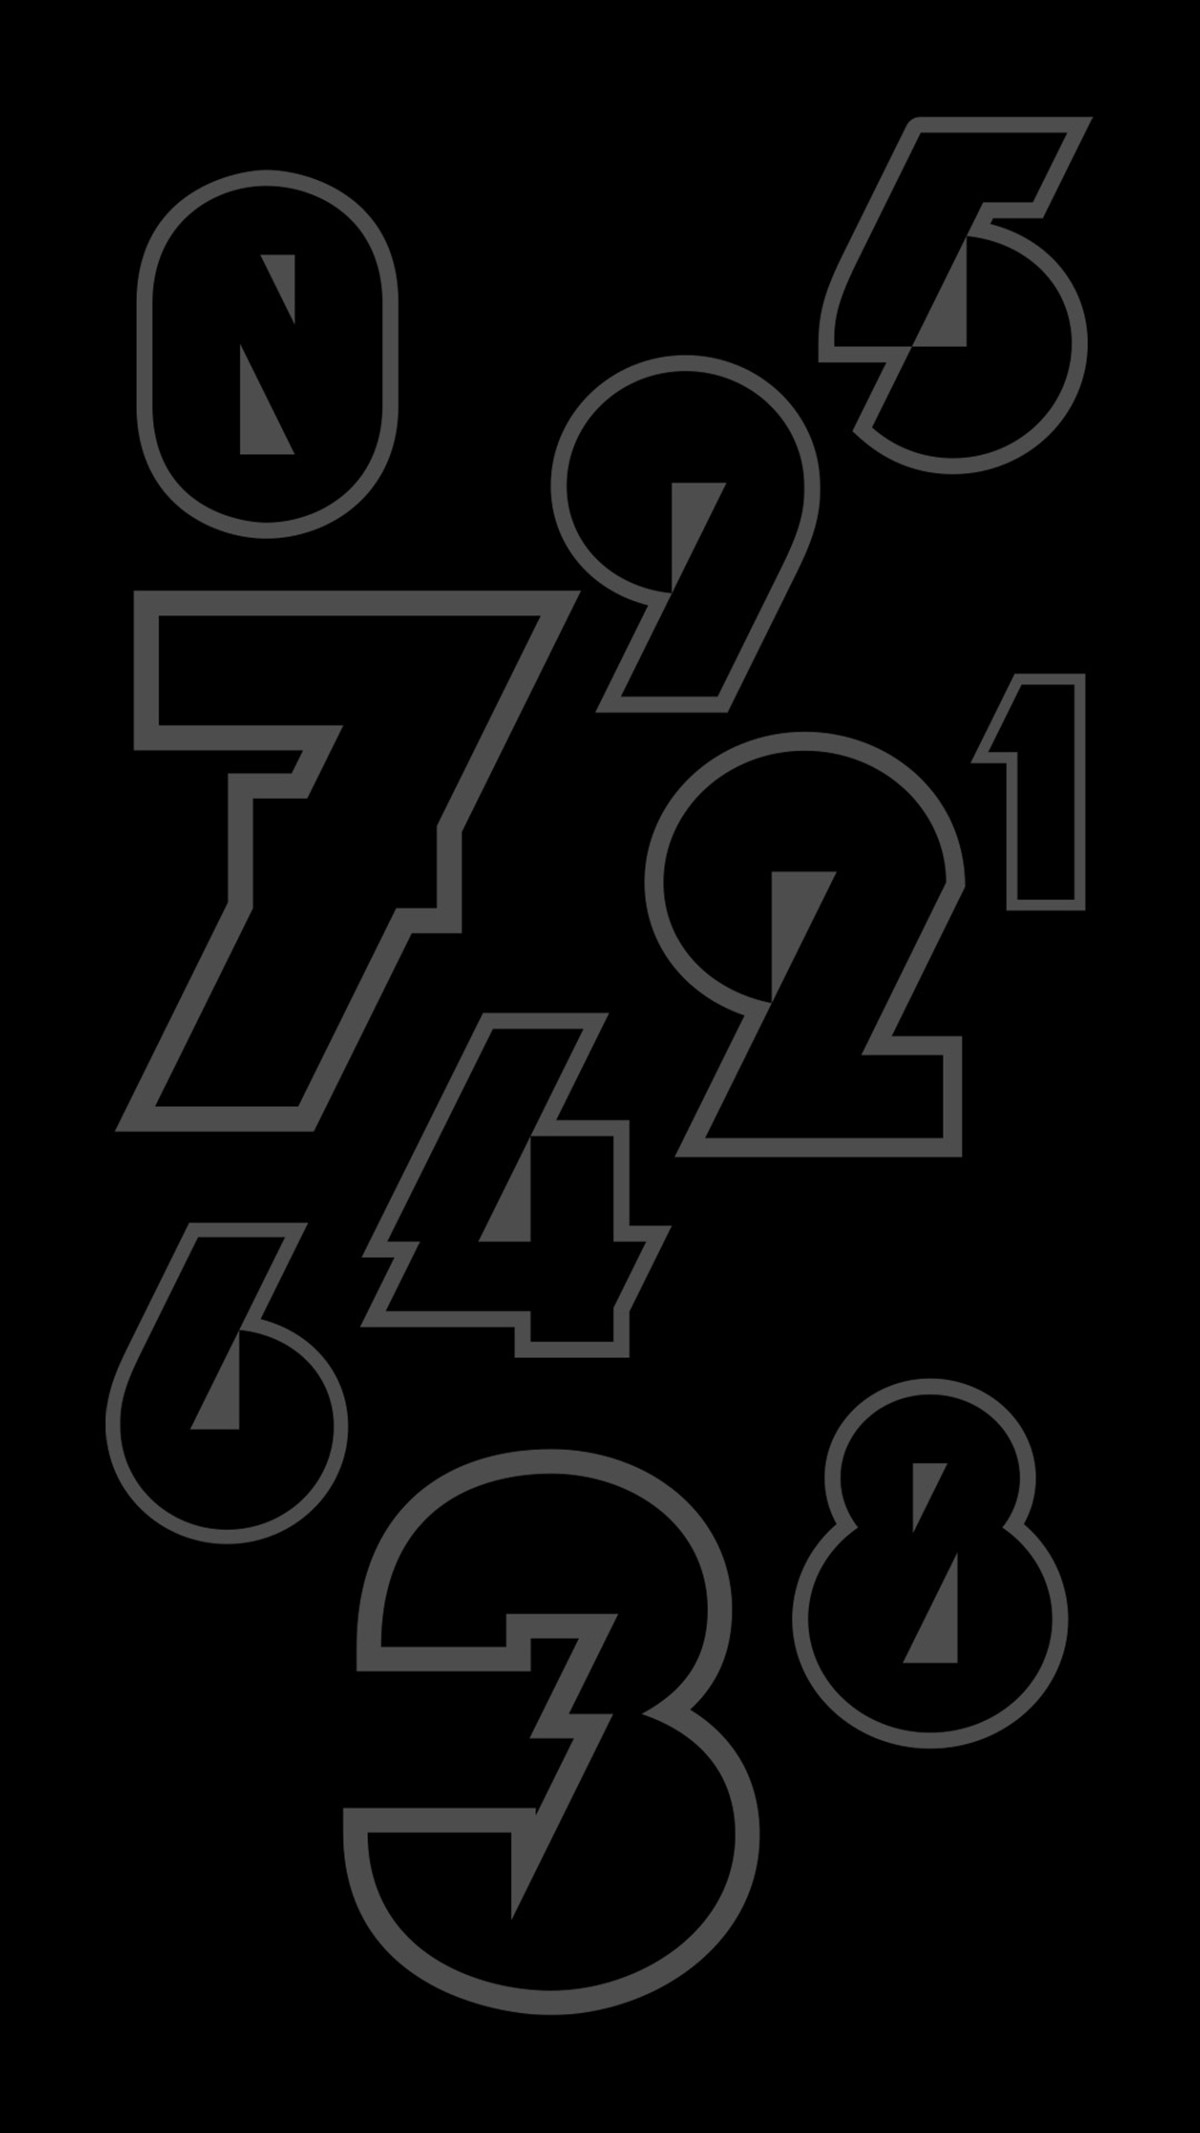 Northern Group. Bespoke numerals. Brand development design by Superfried.